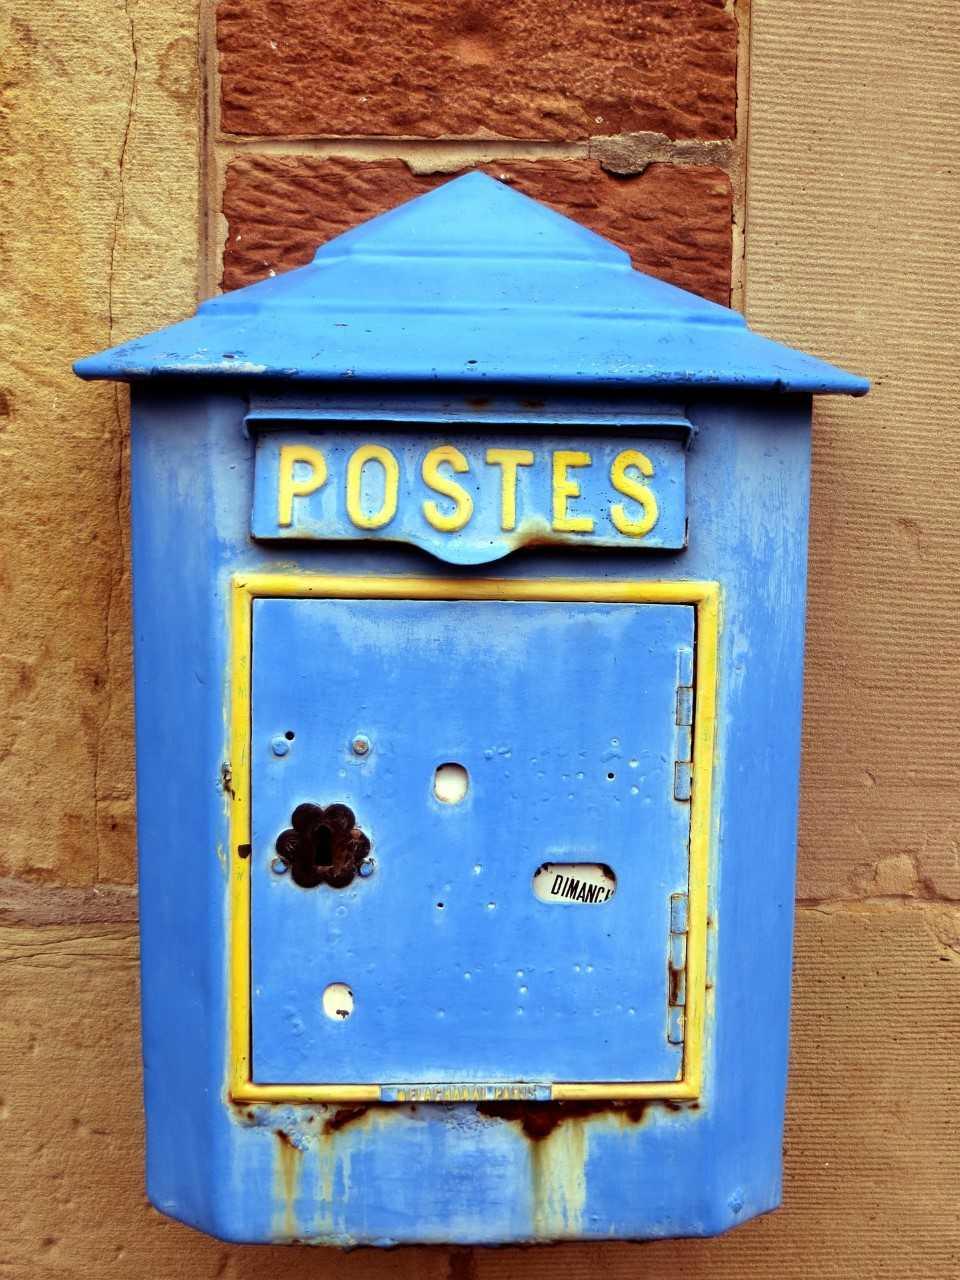 Postbox - FSGS Newsletter